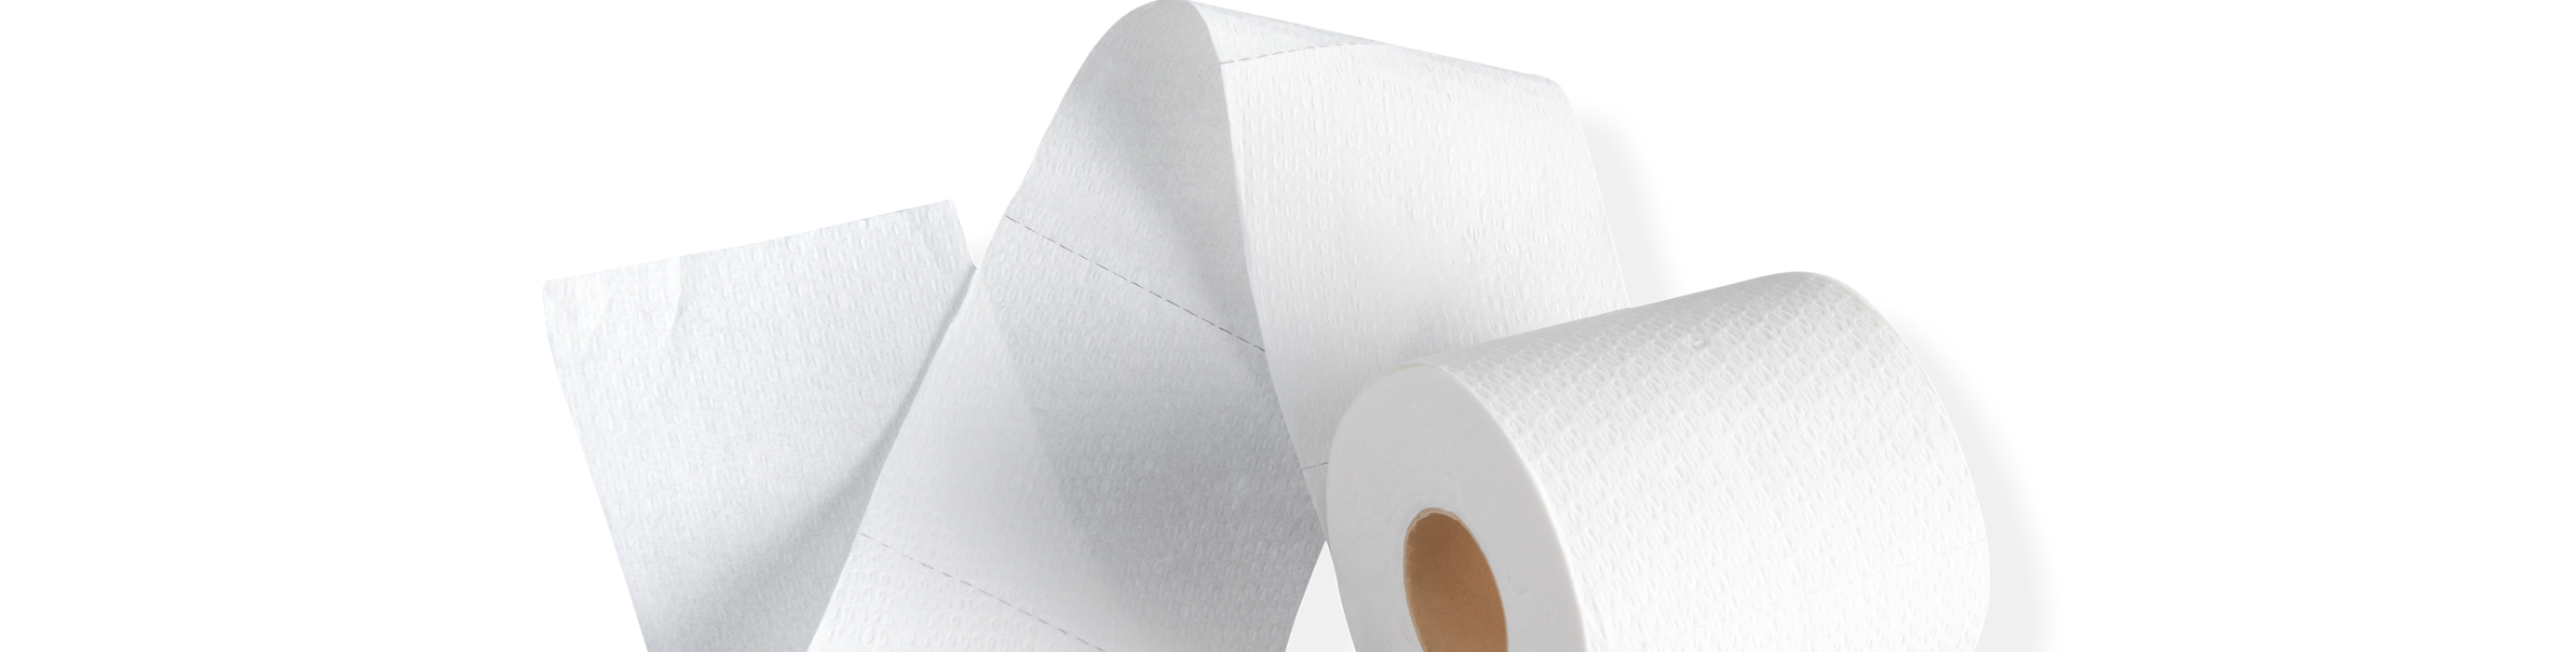 12 Reasons You'll Love Reel Toilet Paper